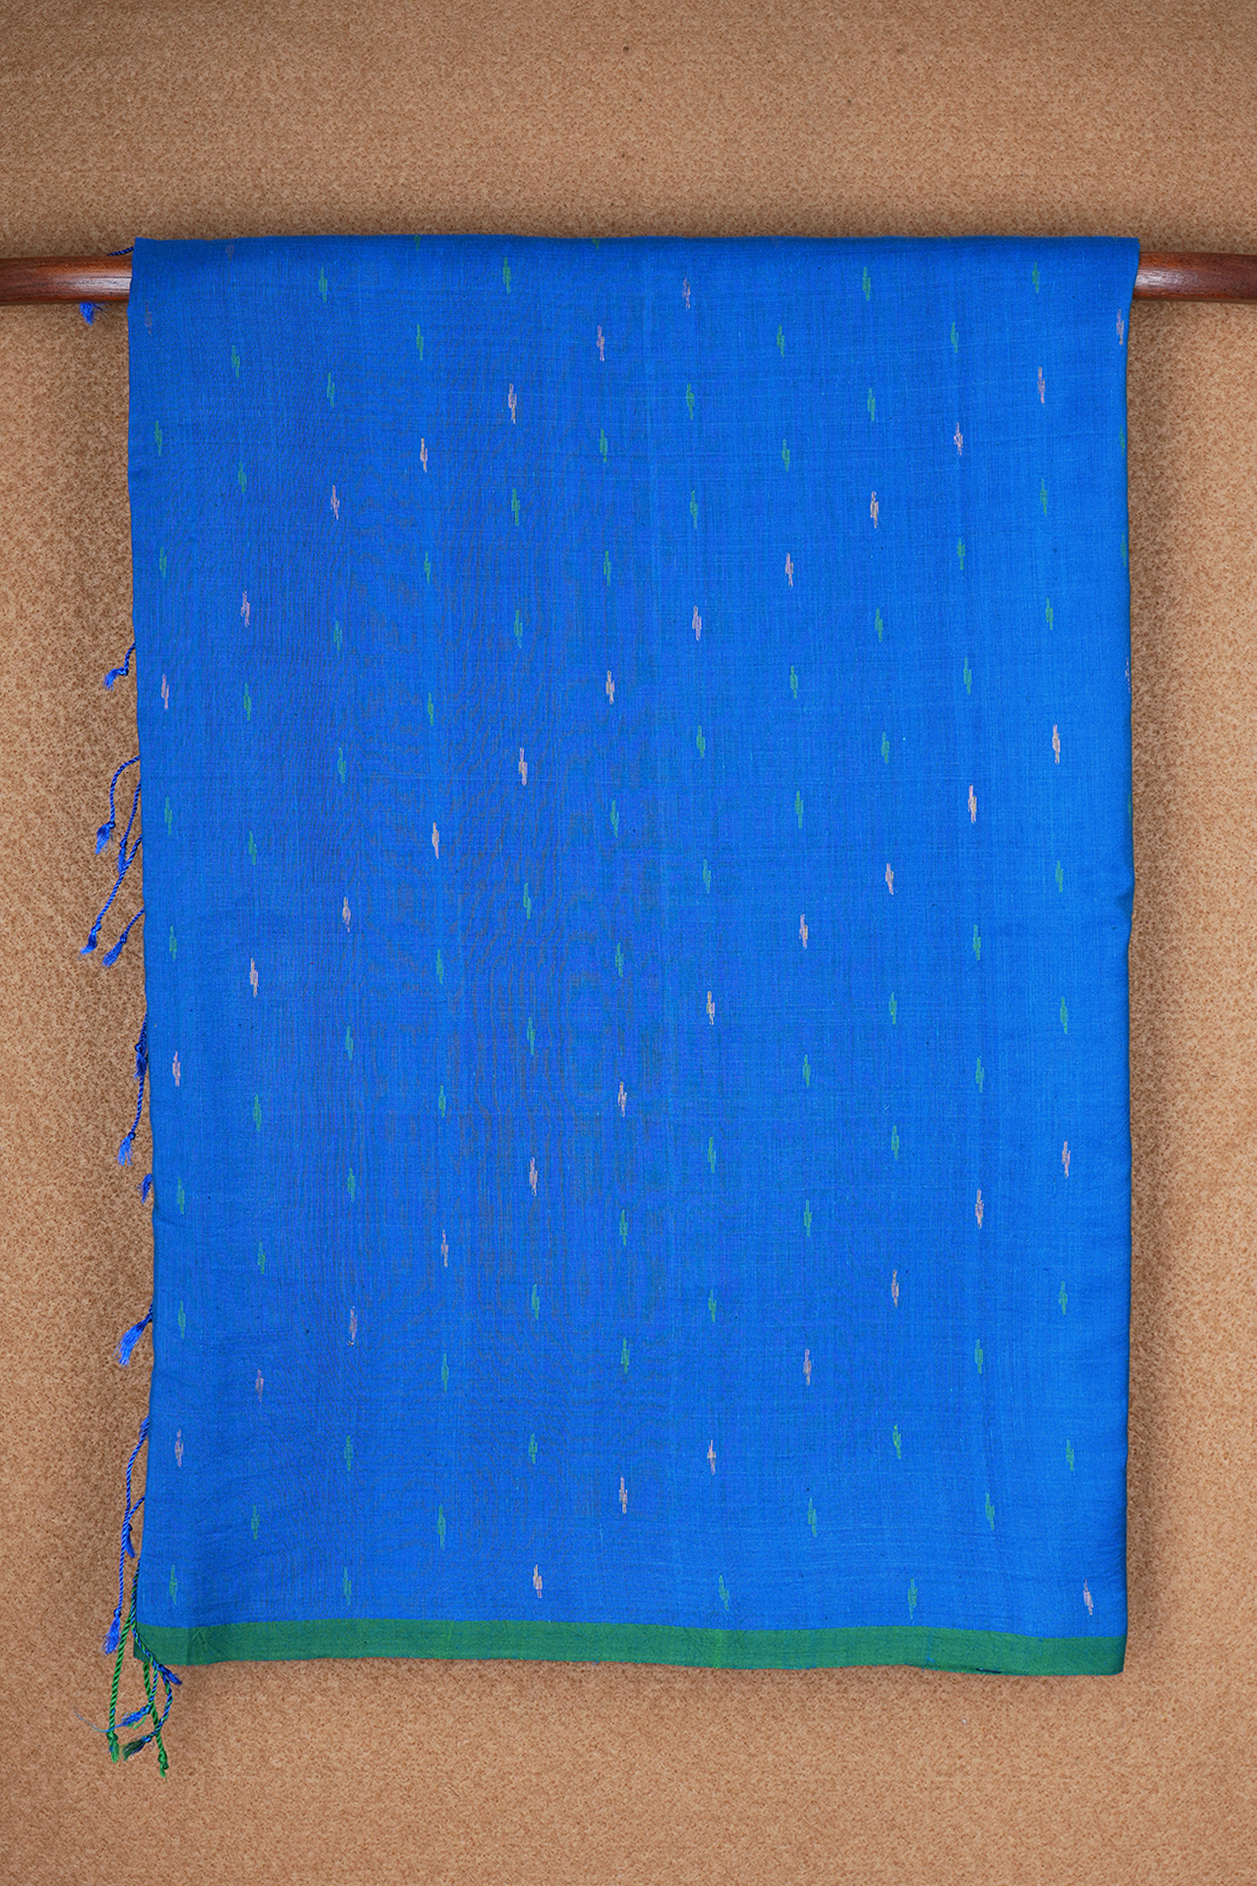 Threadwork Buttis Royal Blue Bengal Cotton Saree